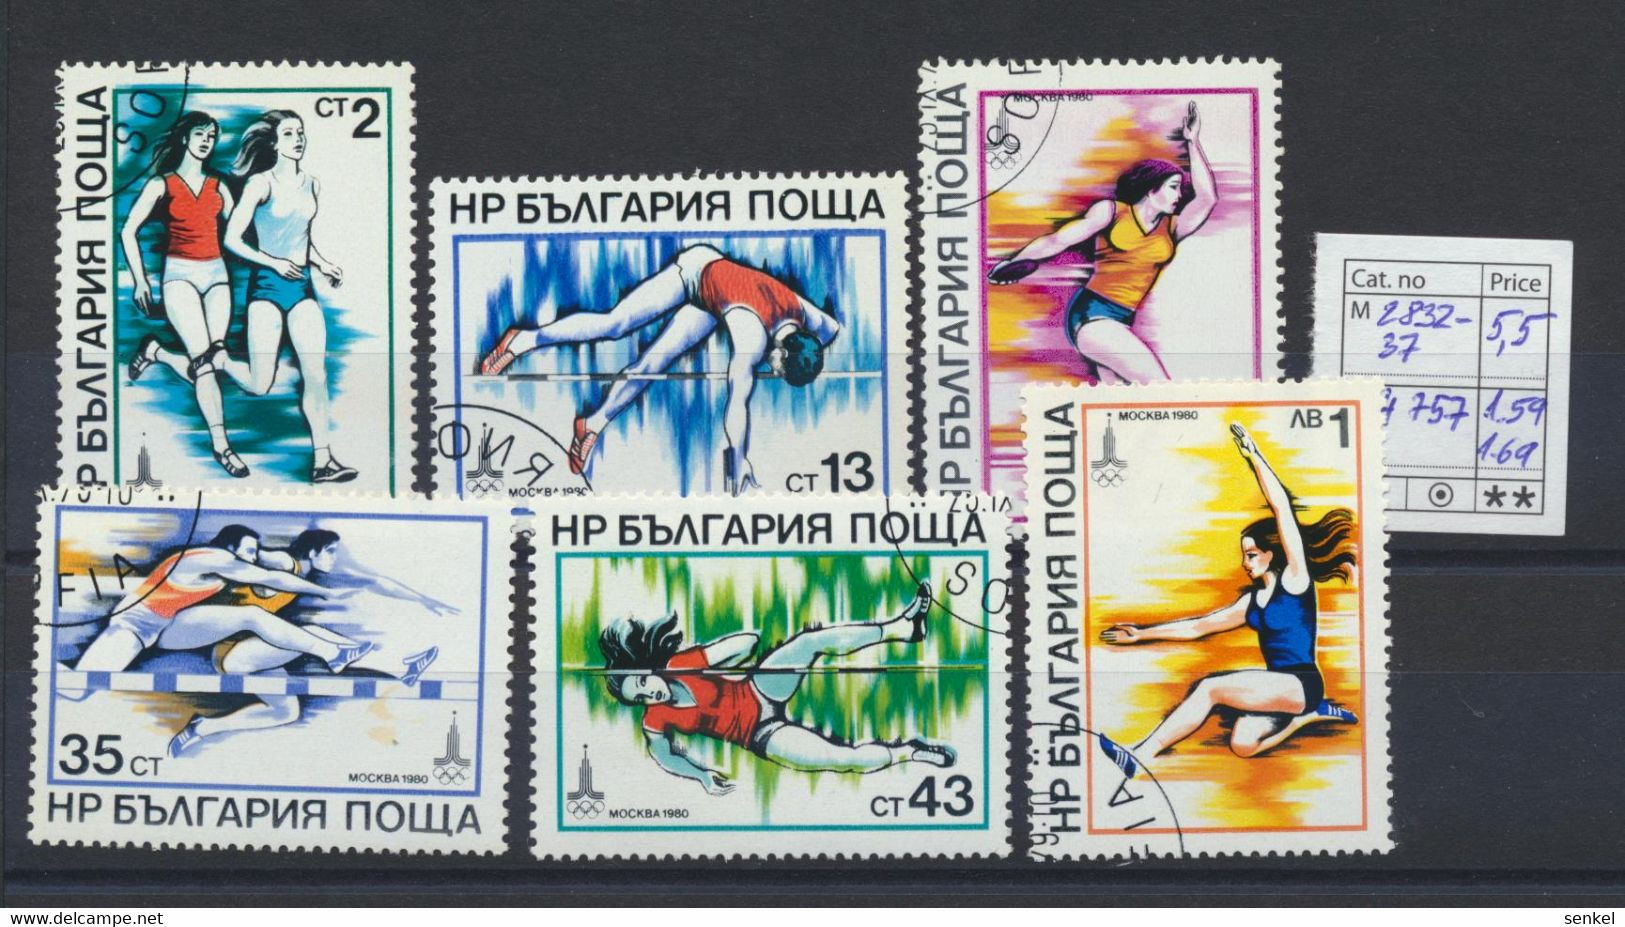 4743 - 4758 Bulgaria 1979 different stamps theatre olympics alpinism cosmos exhibition